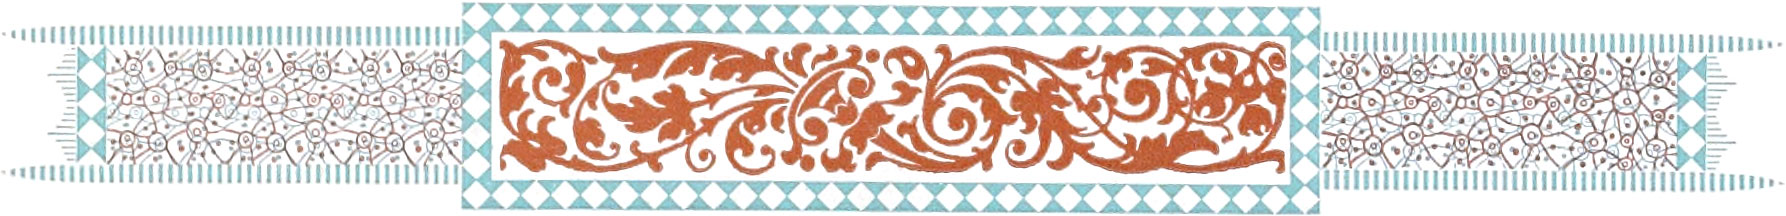 Ornate border comprising reddish-brown and teal colors